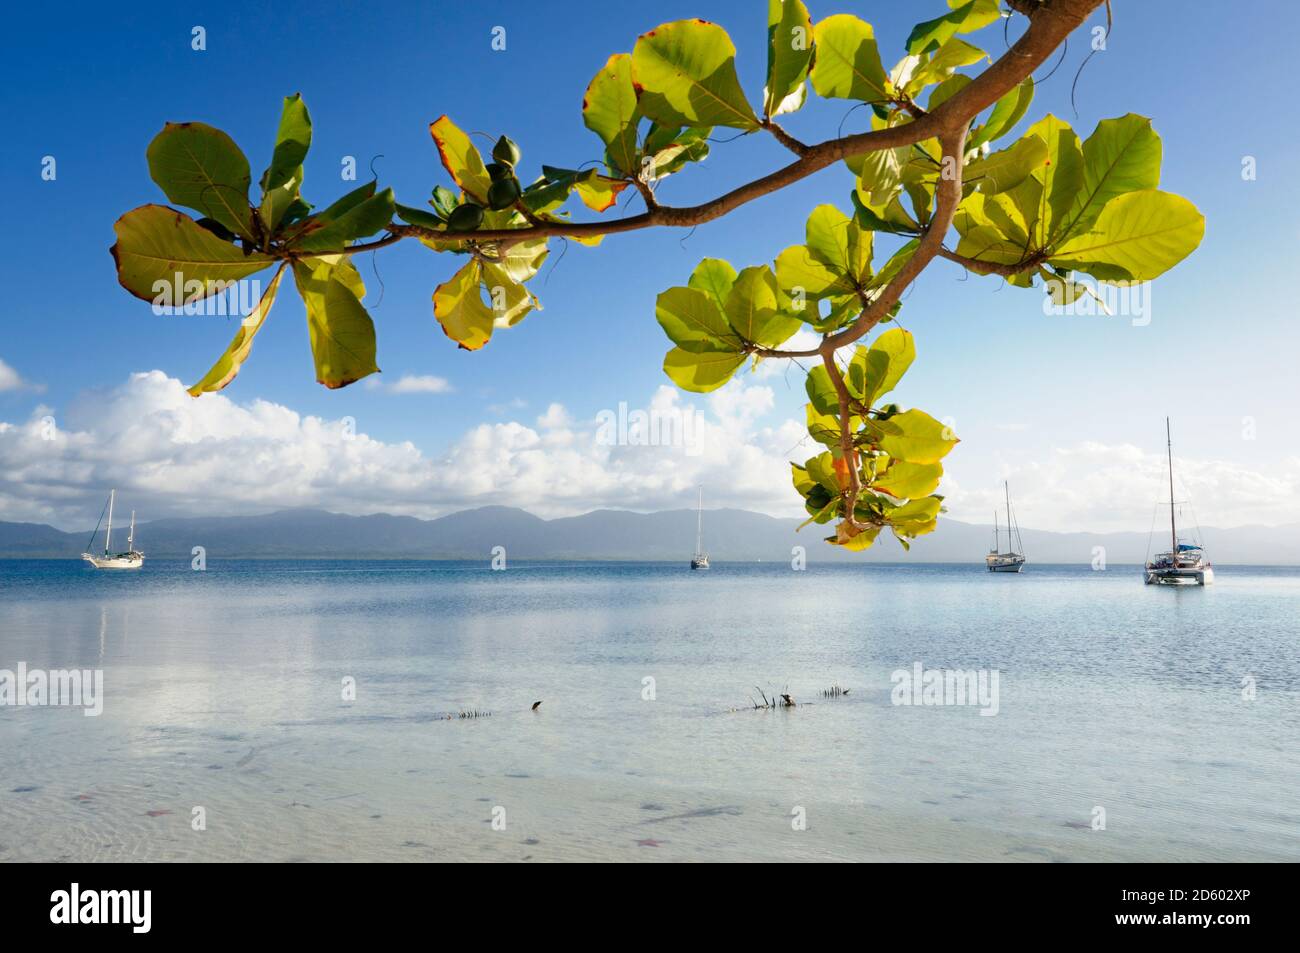 Panama, San Blas Islands, Sailing boats near Isla Moron Stock Photo